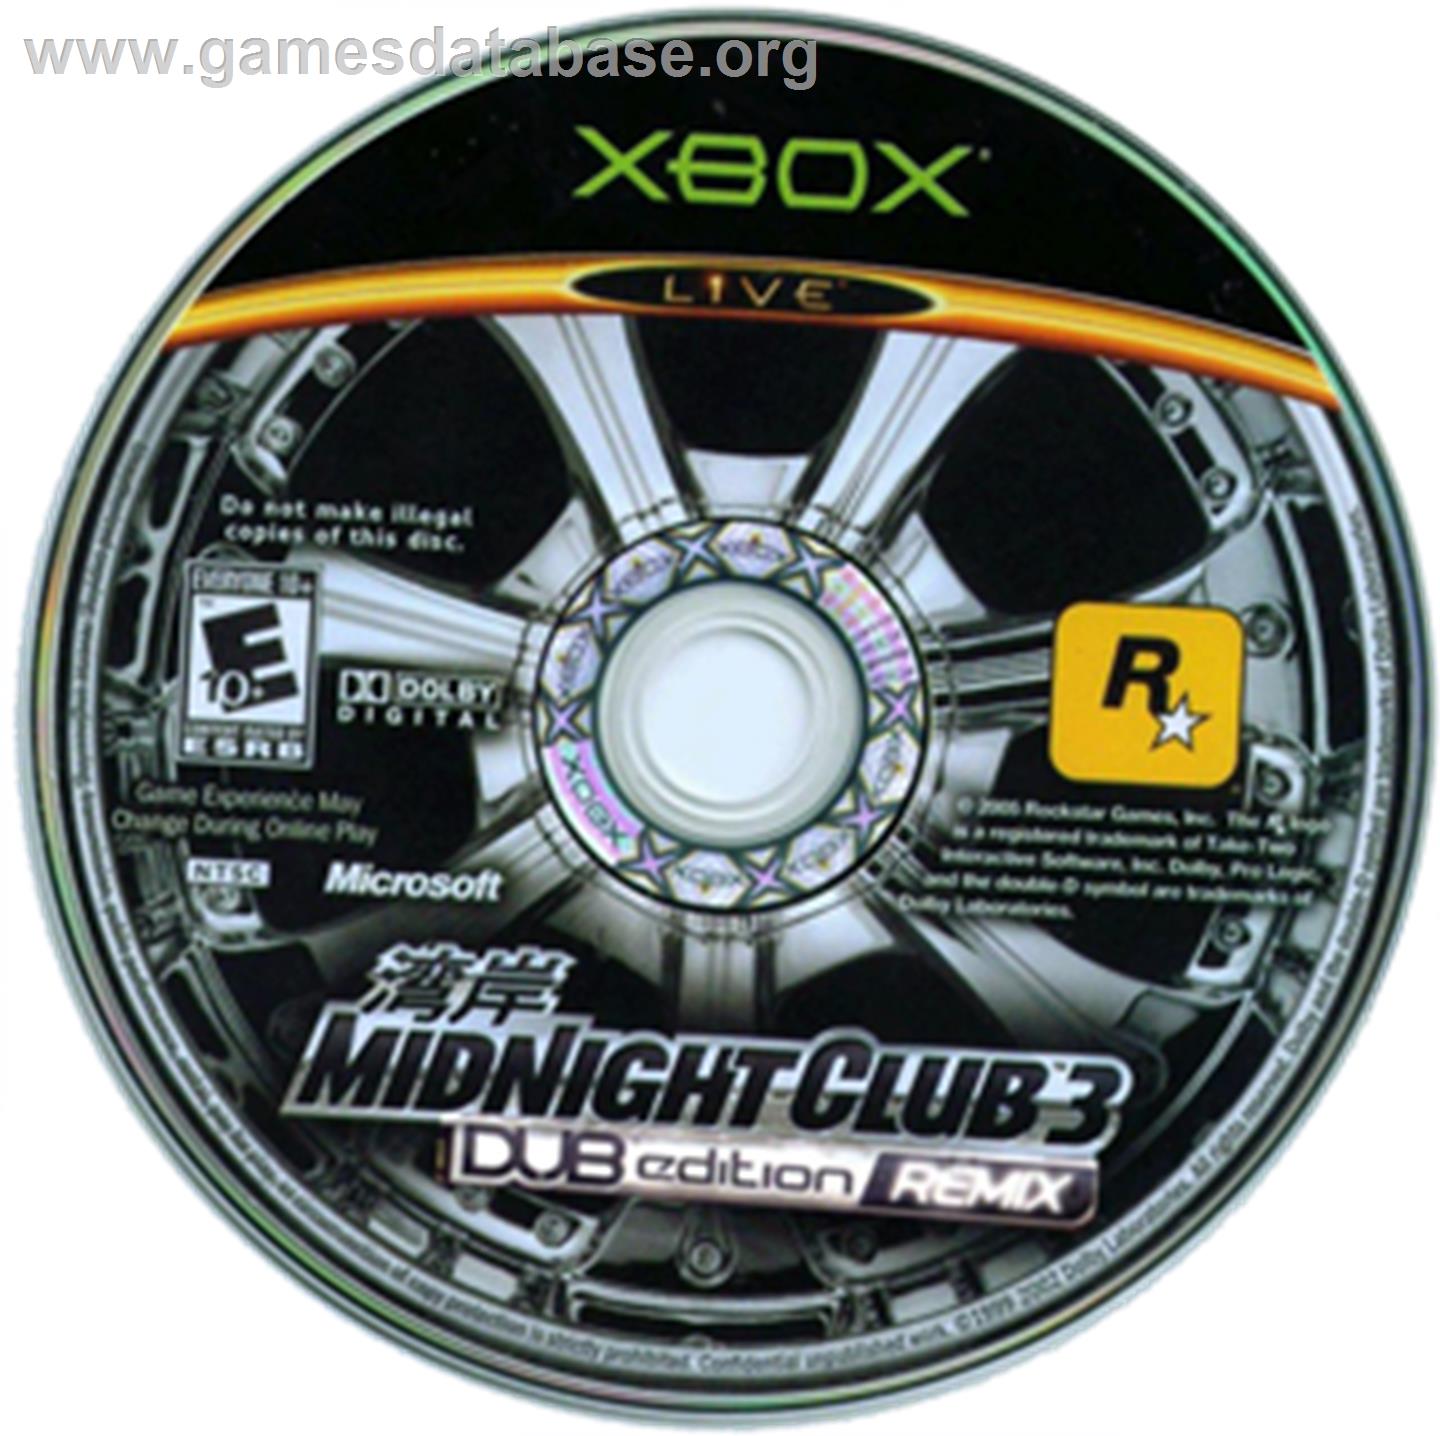 Midnight Club 3: DUB Edition Remix - Microsoft Xbox - Artwork - CD